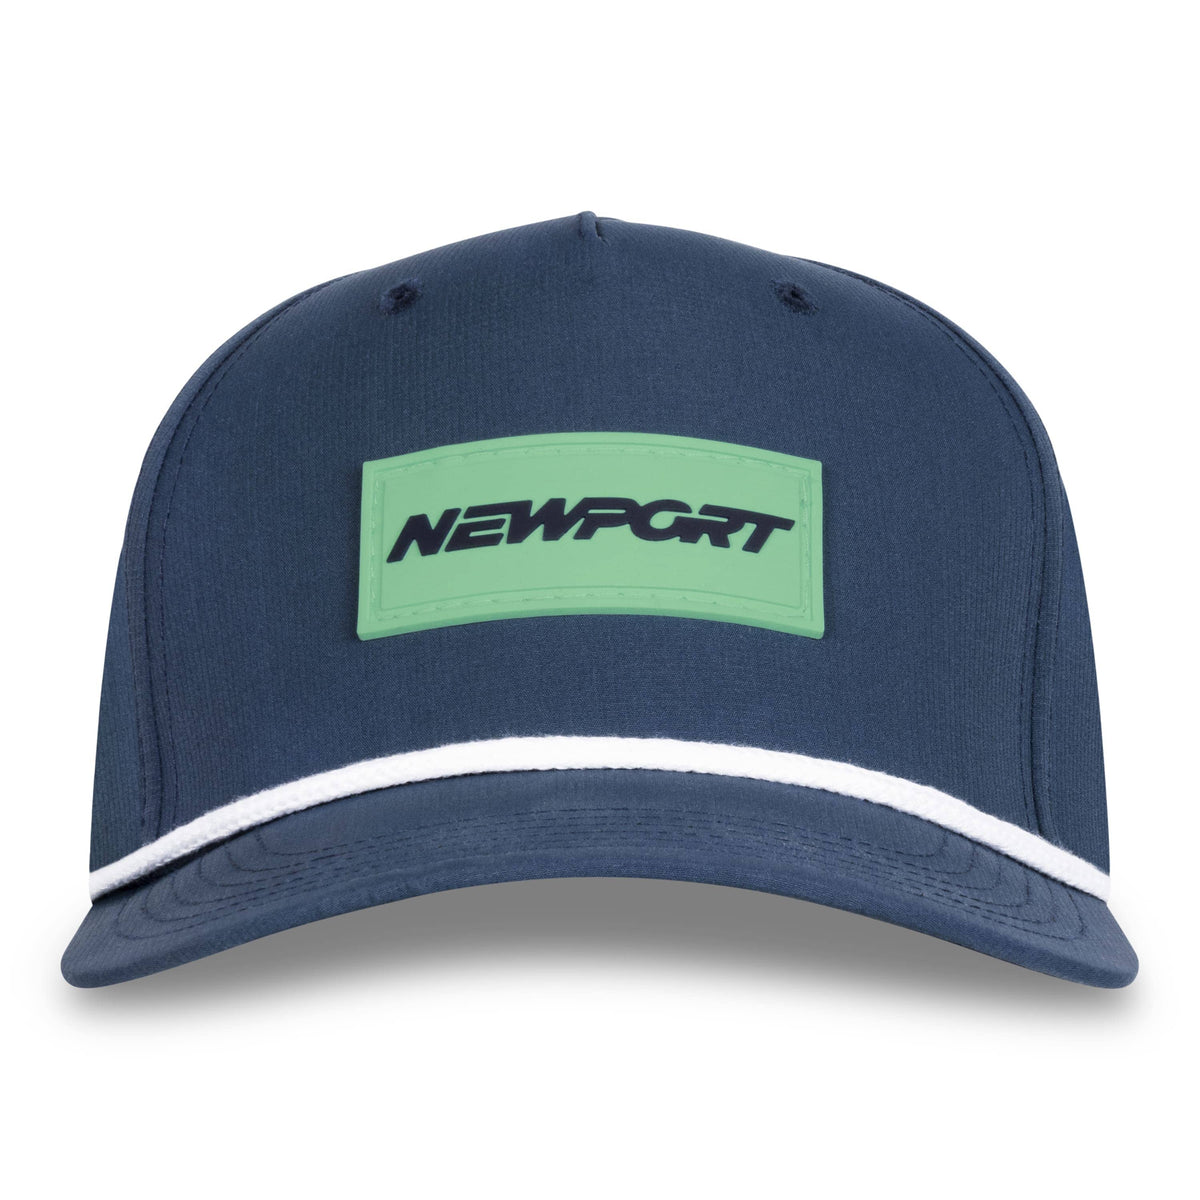 Newport Rope Hat